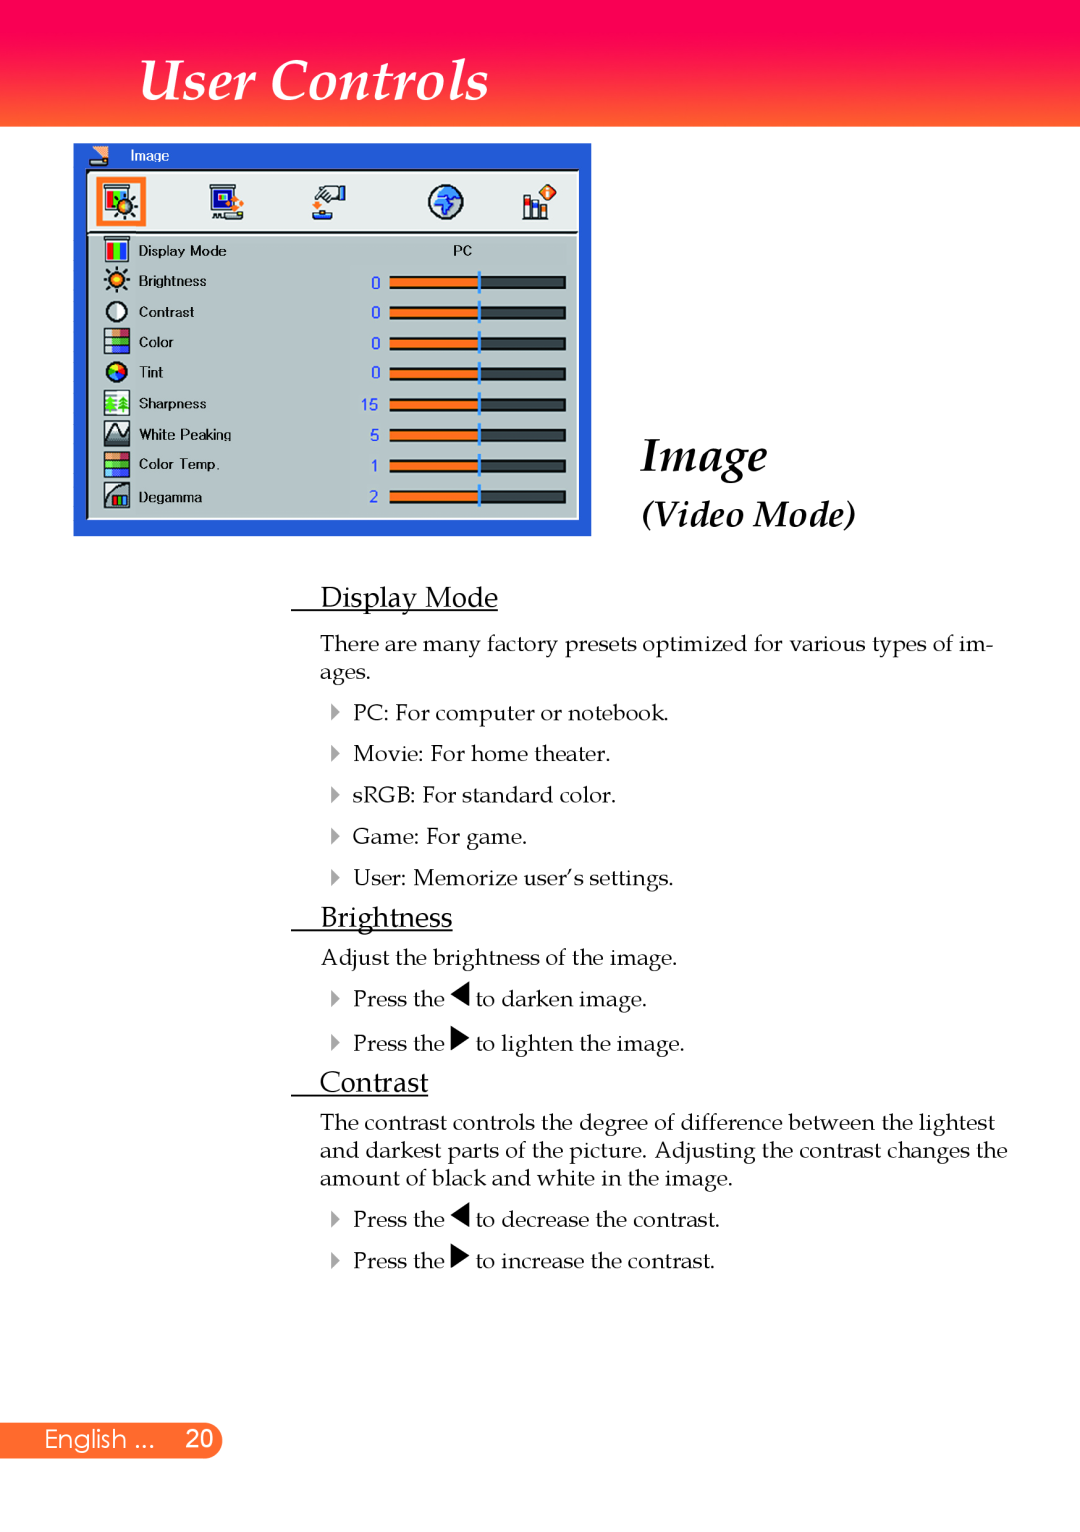 InFocus X9 manual Video Mode, User Controls, Image, Display Mode, Brightness, Contrast, English 